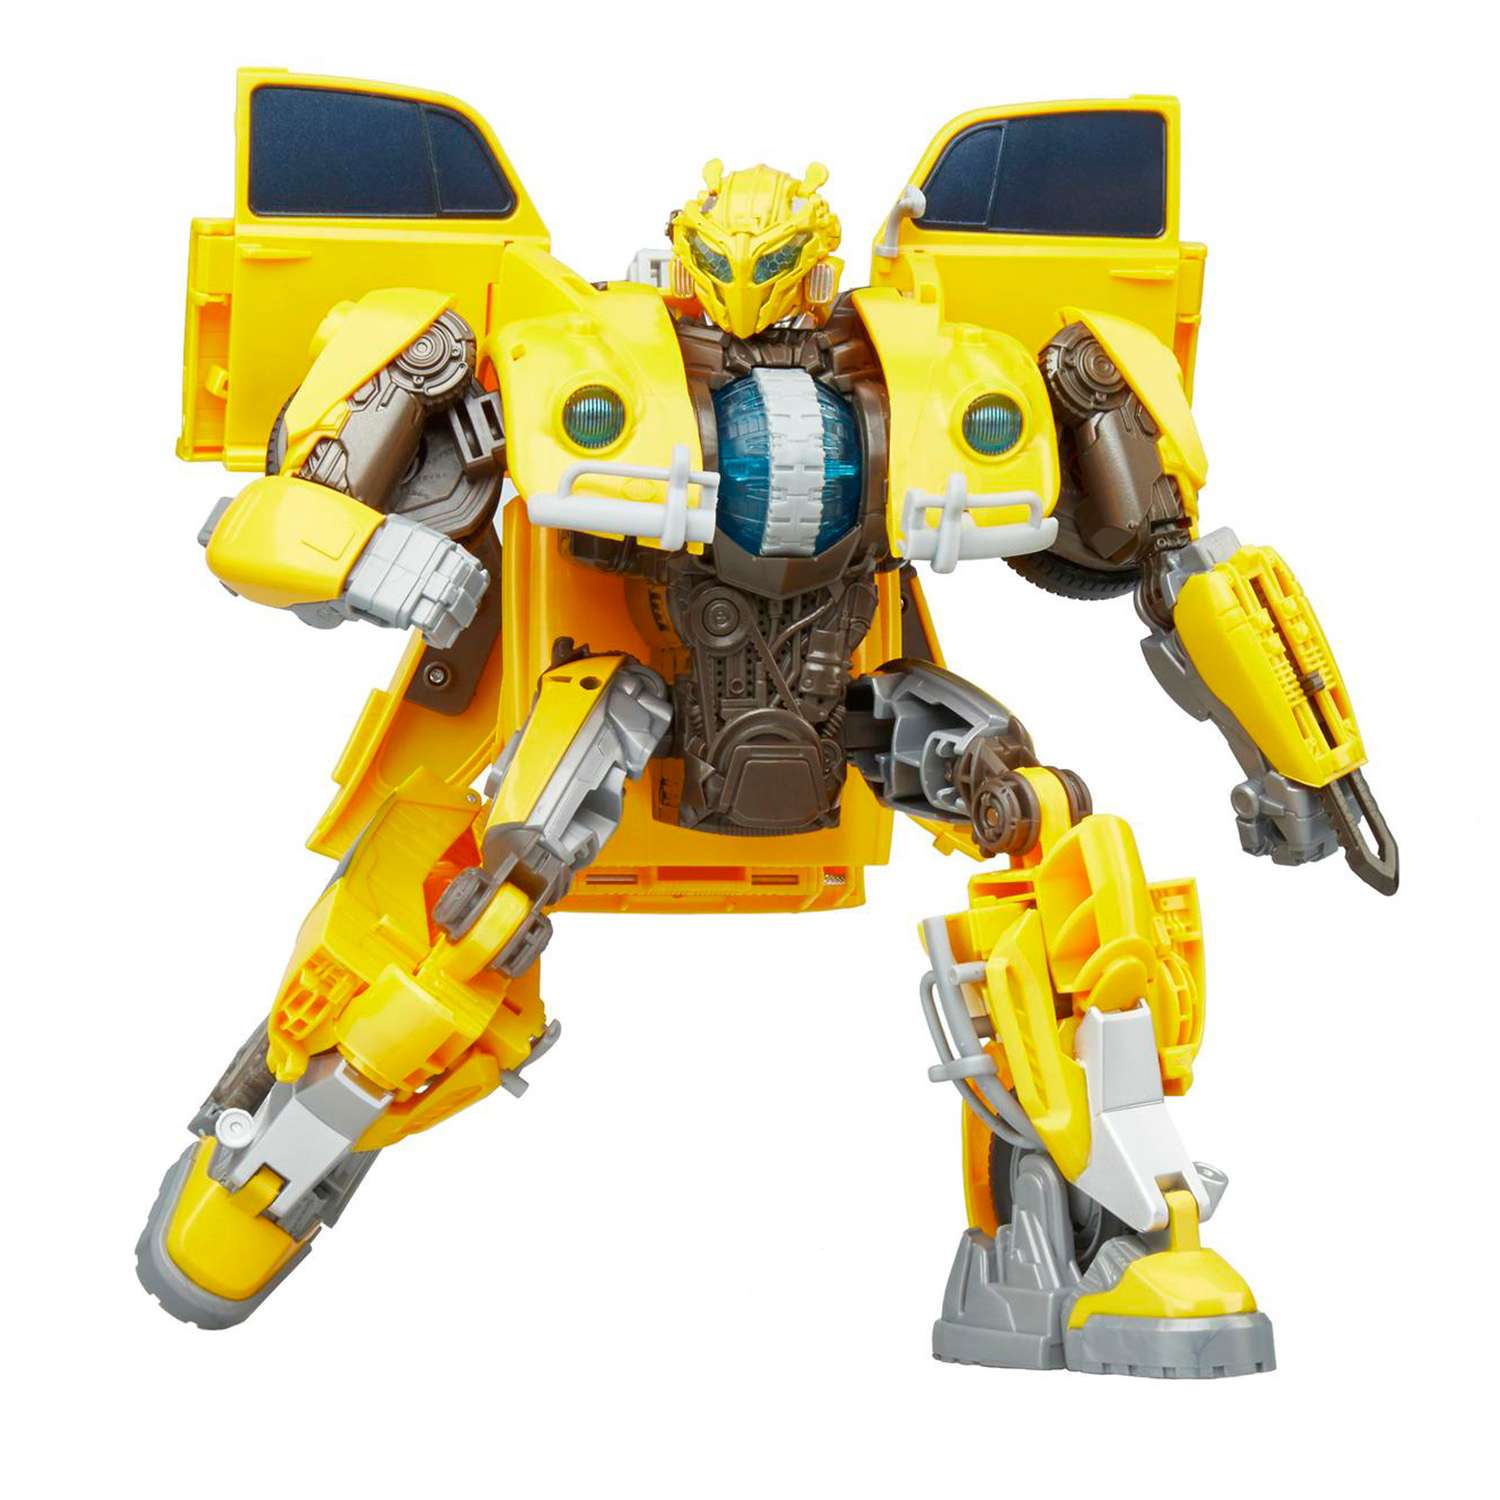 Игрушка Transformers интерактивная Бамблби F19525E0 - фото 2